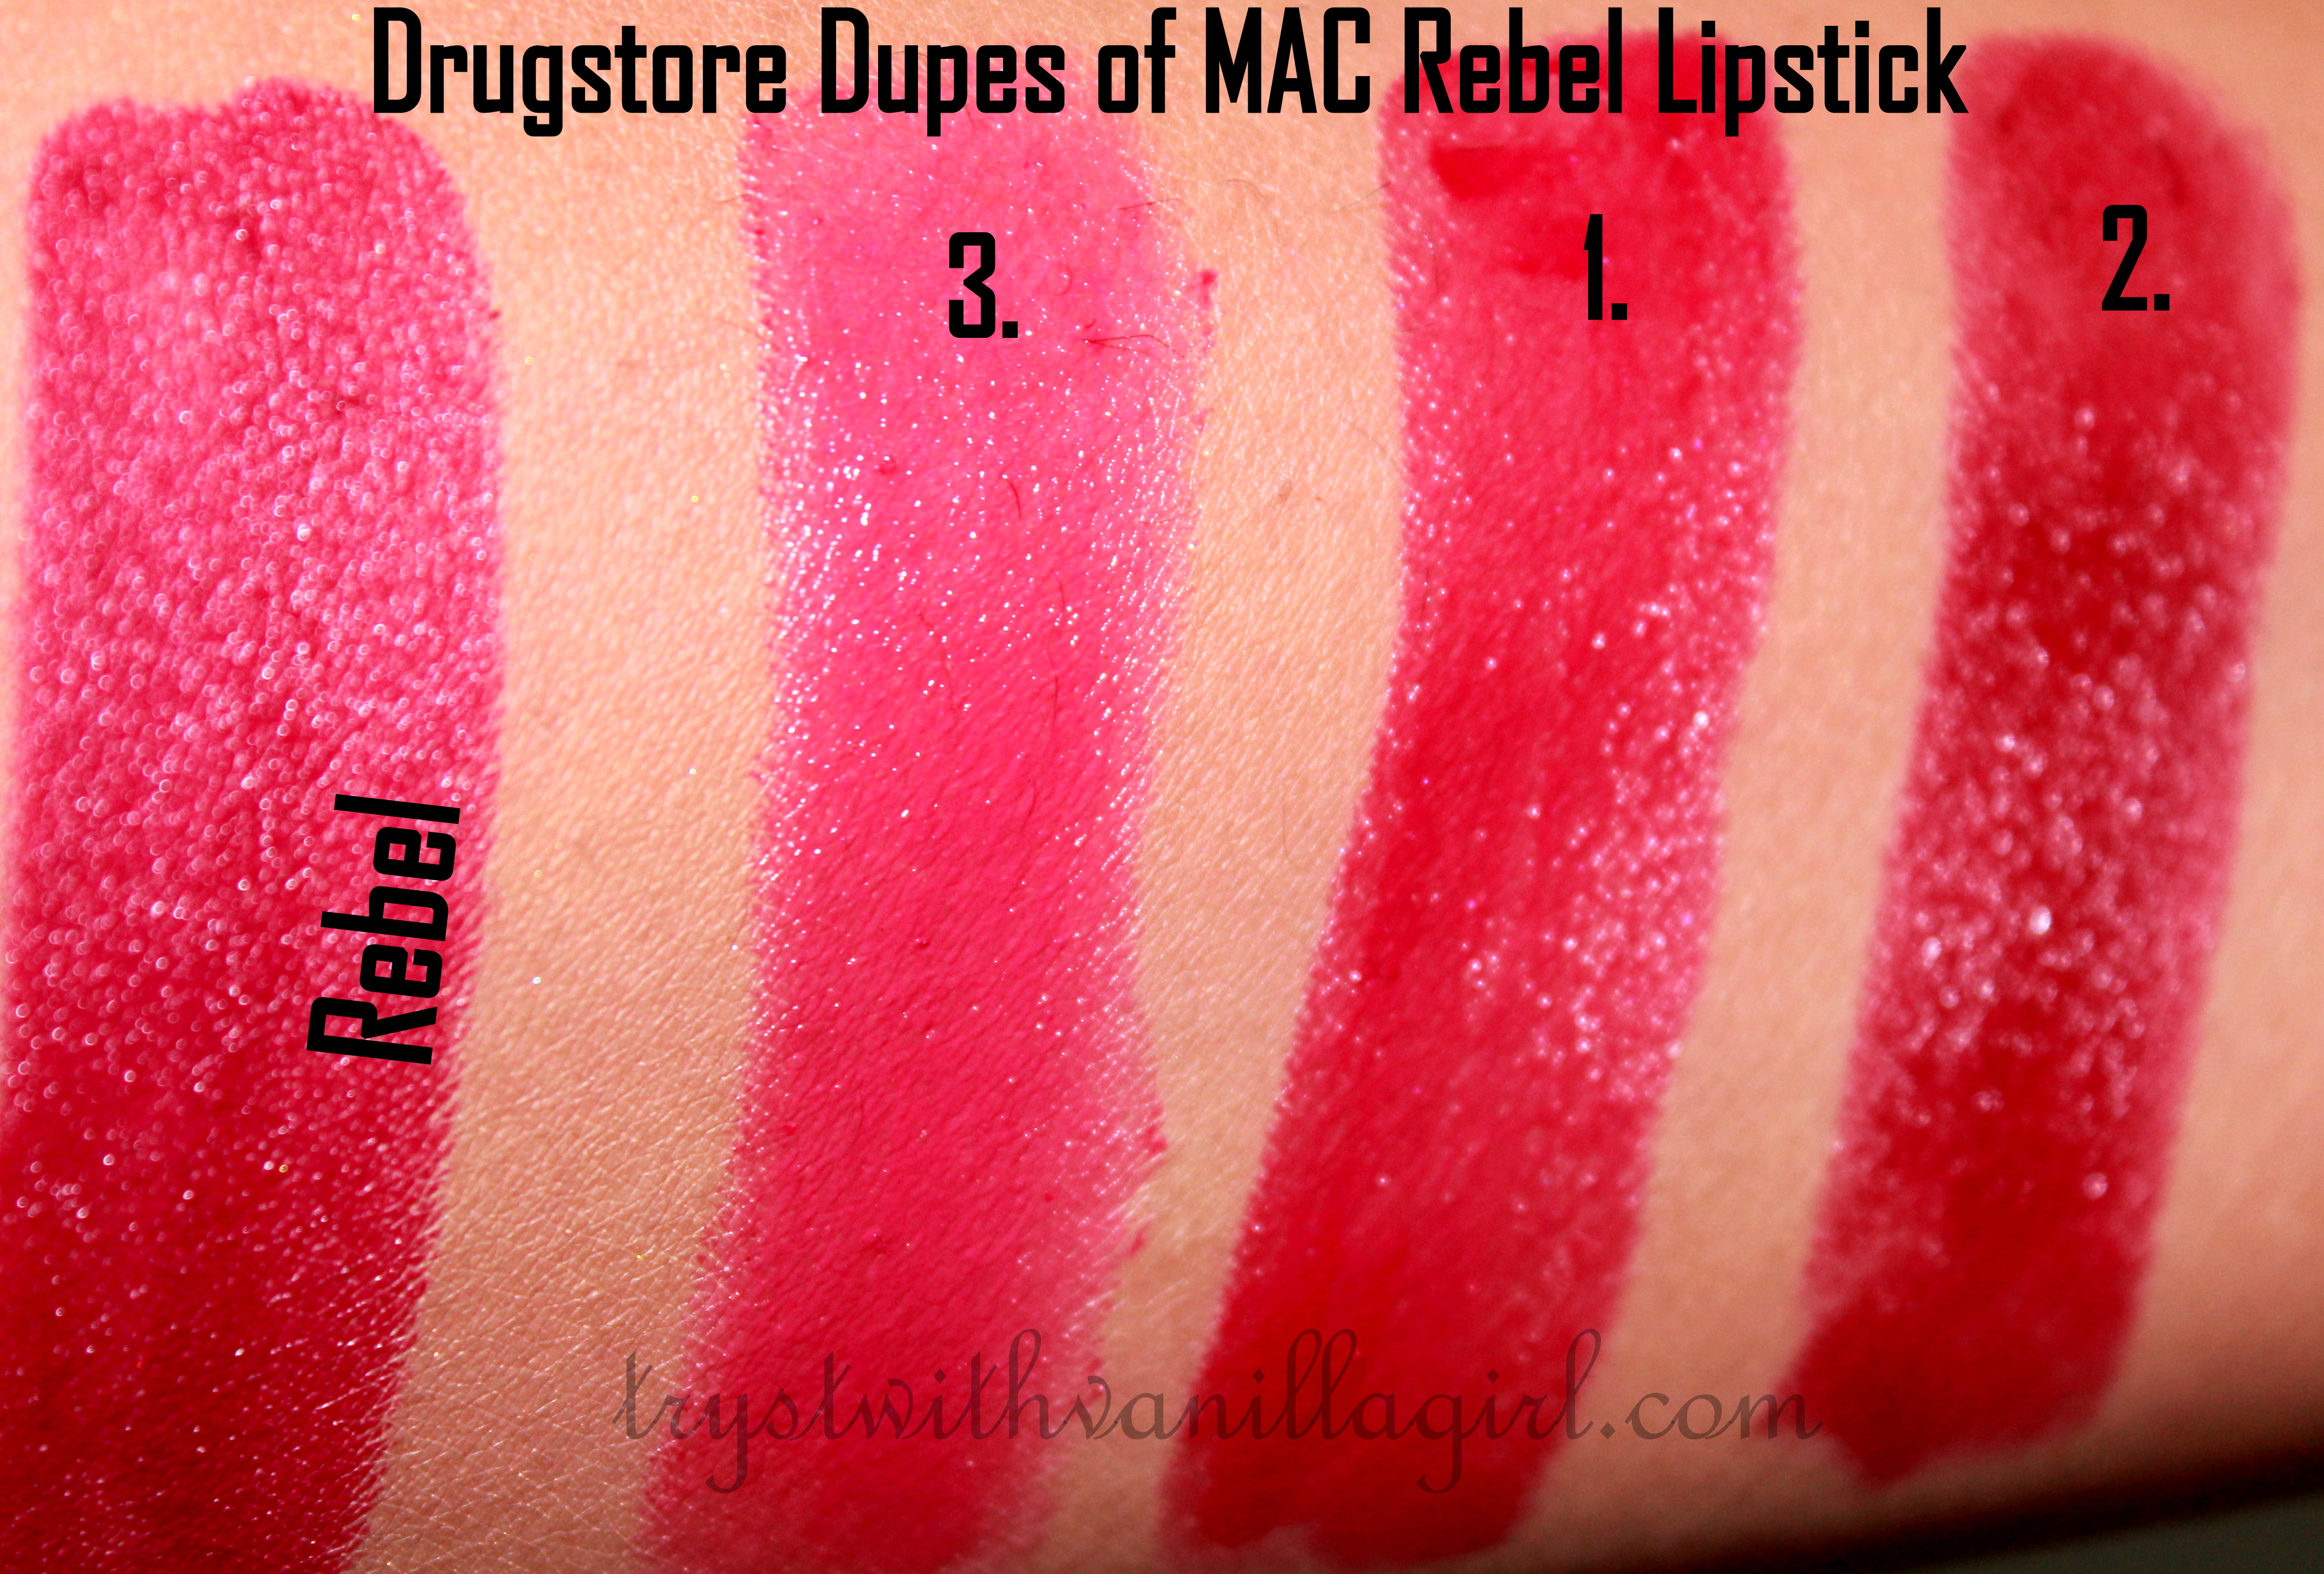 Drugstore Dupes of MAC Rebel Lipstick,MAC Rebel Lipstick,Dupes,Swatches